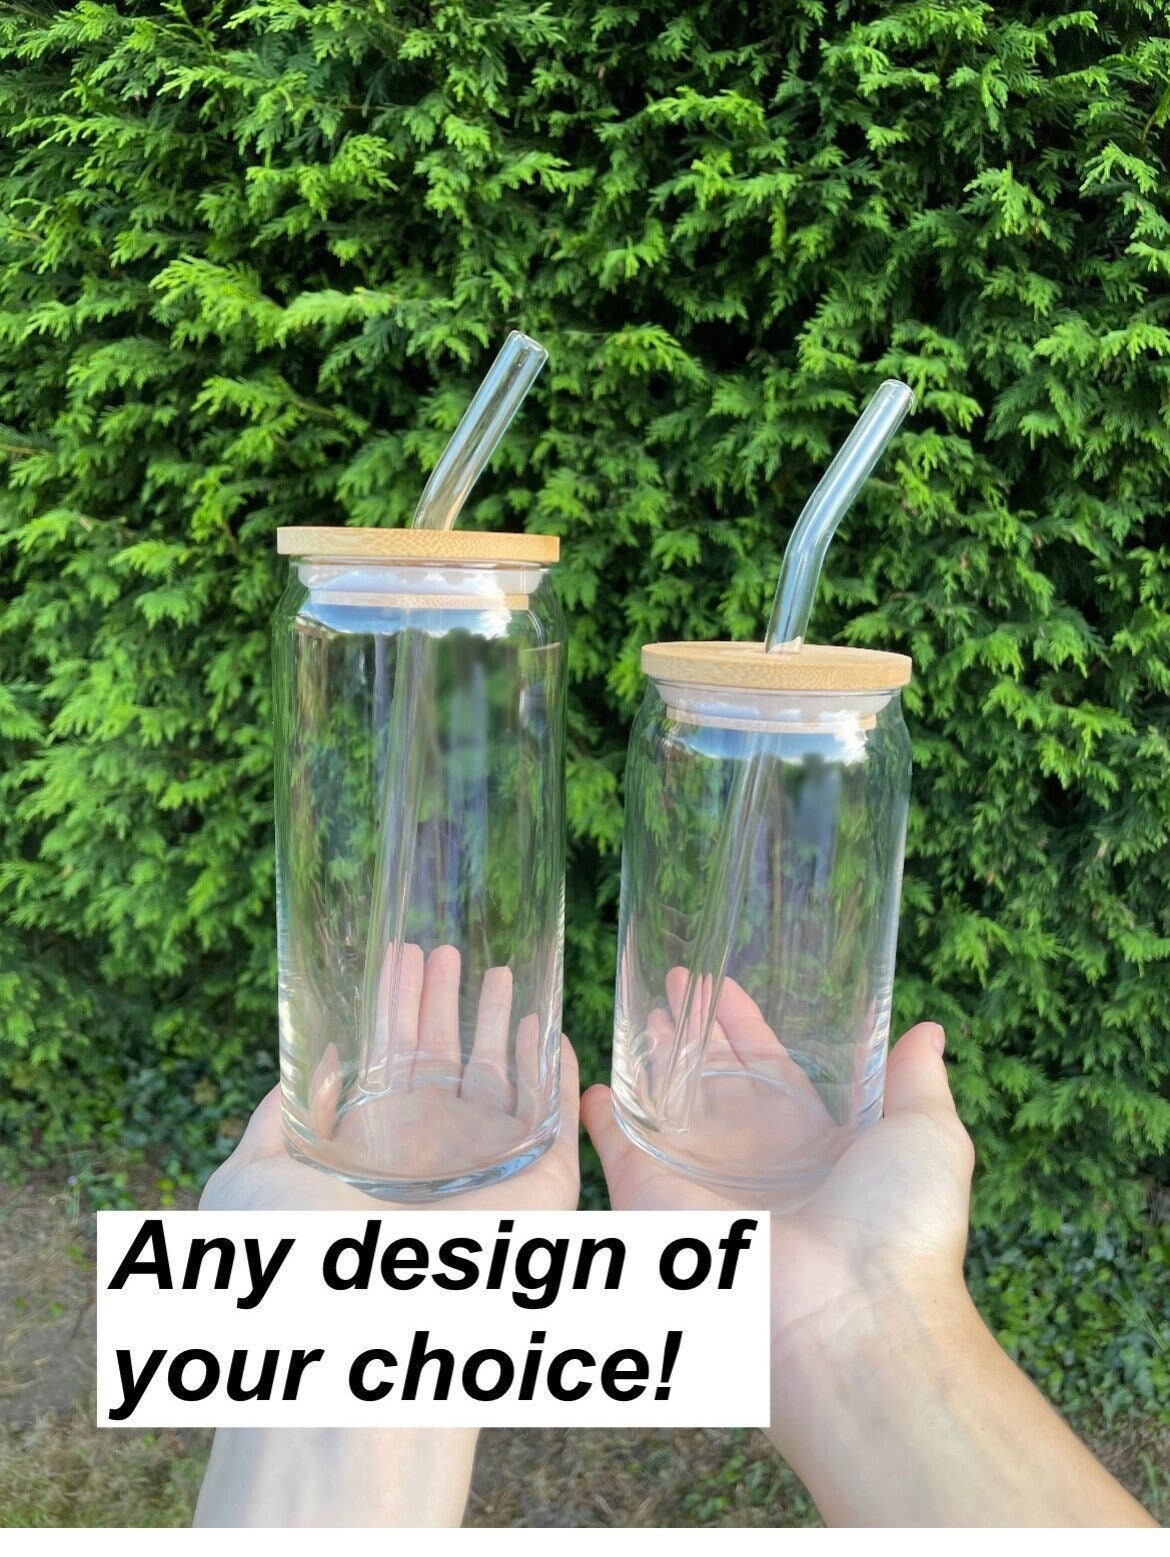 4Pack Glass Tumbler Cups w Bamboo Lids & Straws, 22oz Mason Jar Drinking  Glasses